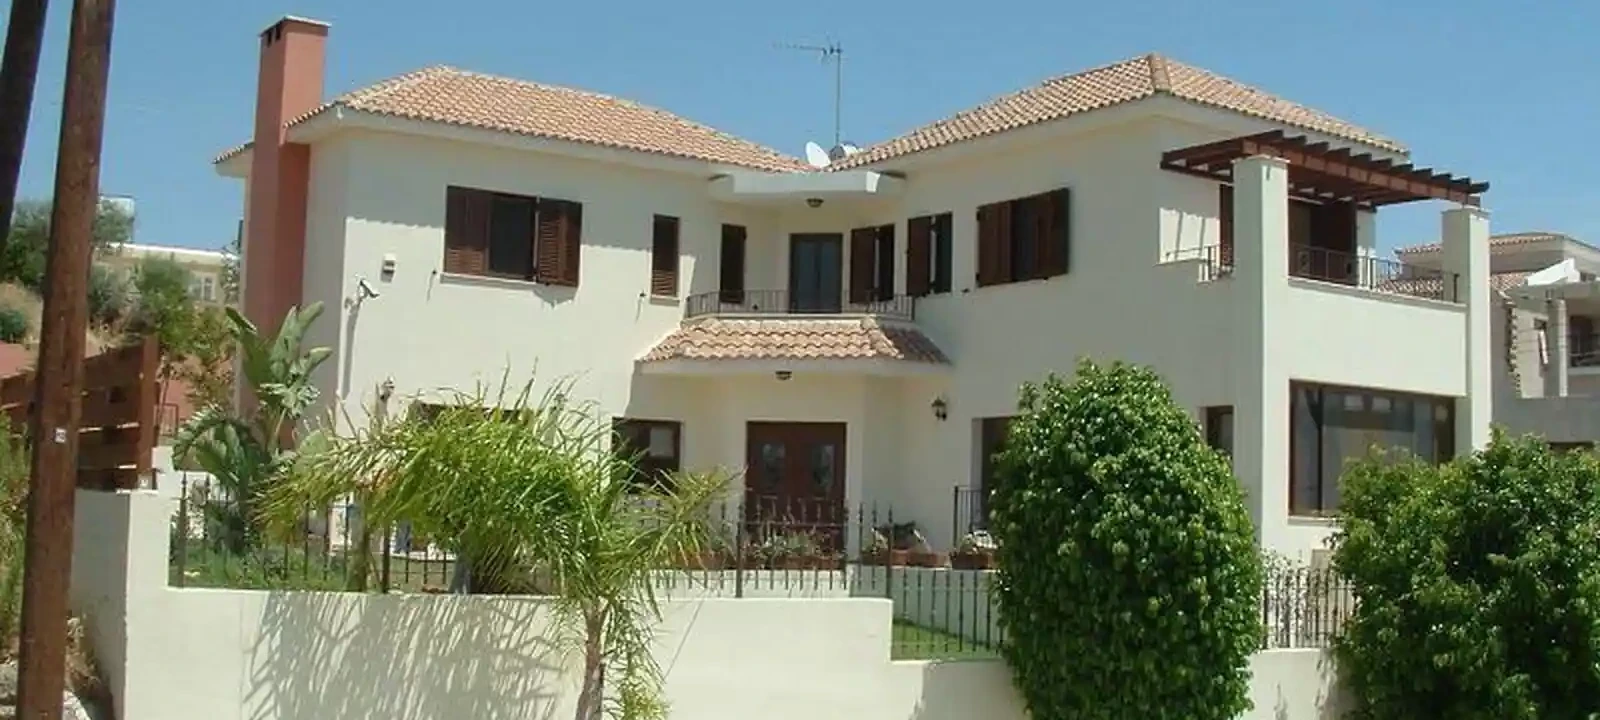 4-bedroom detached house to rent €1.300, image 1